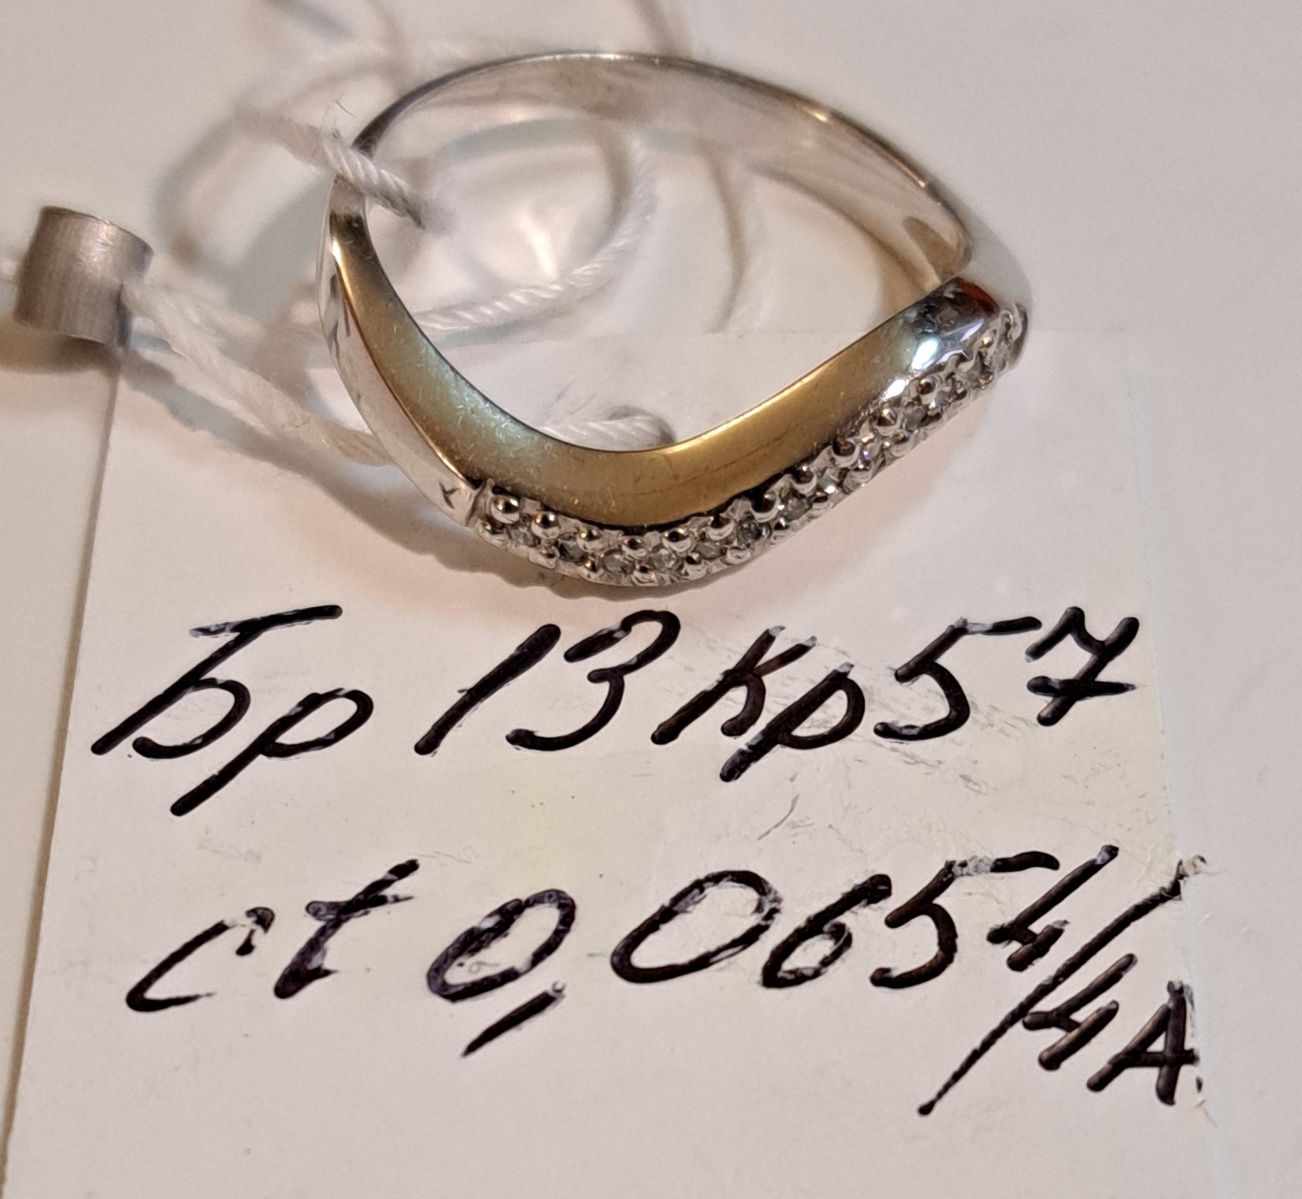 Золотое кольцо с бриллиантами. 2,73 грм